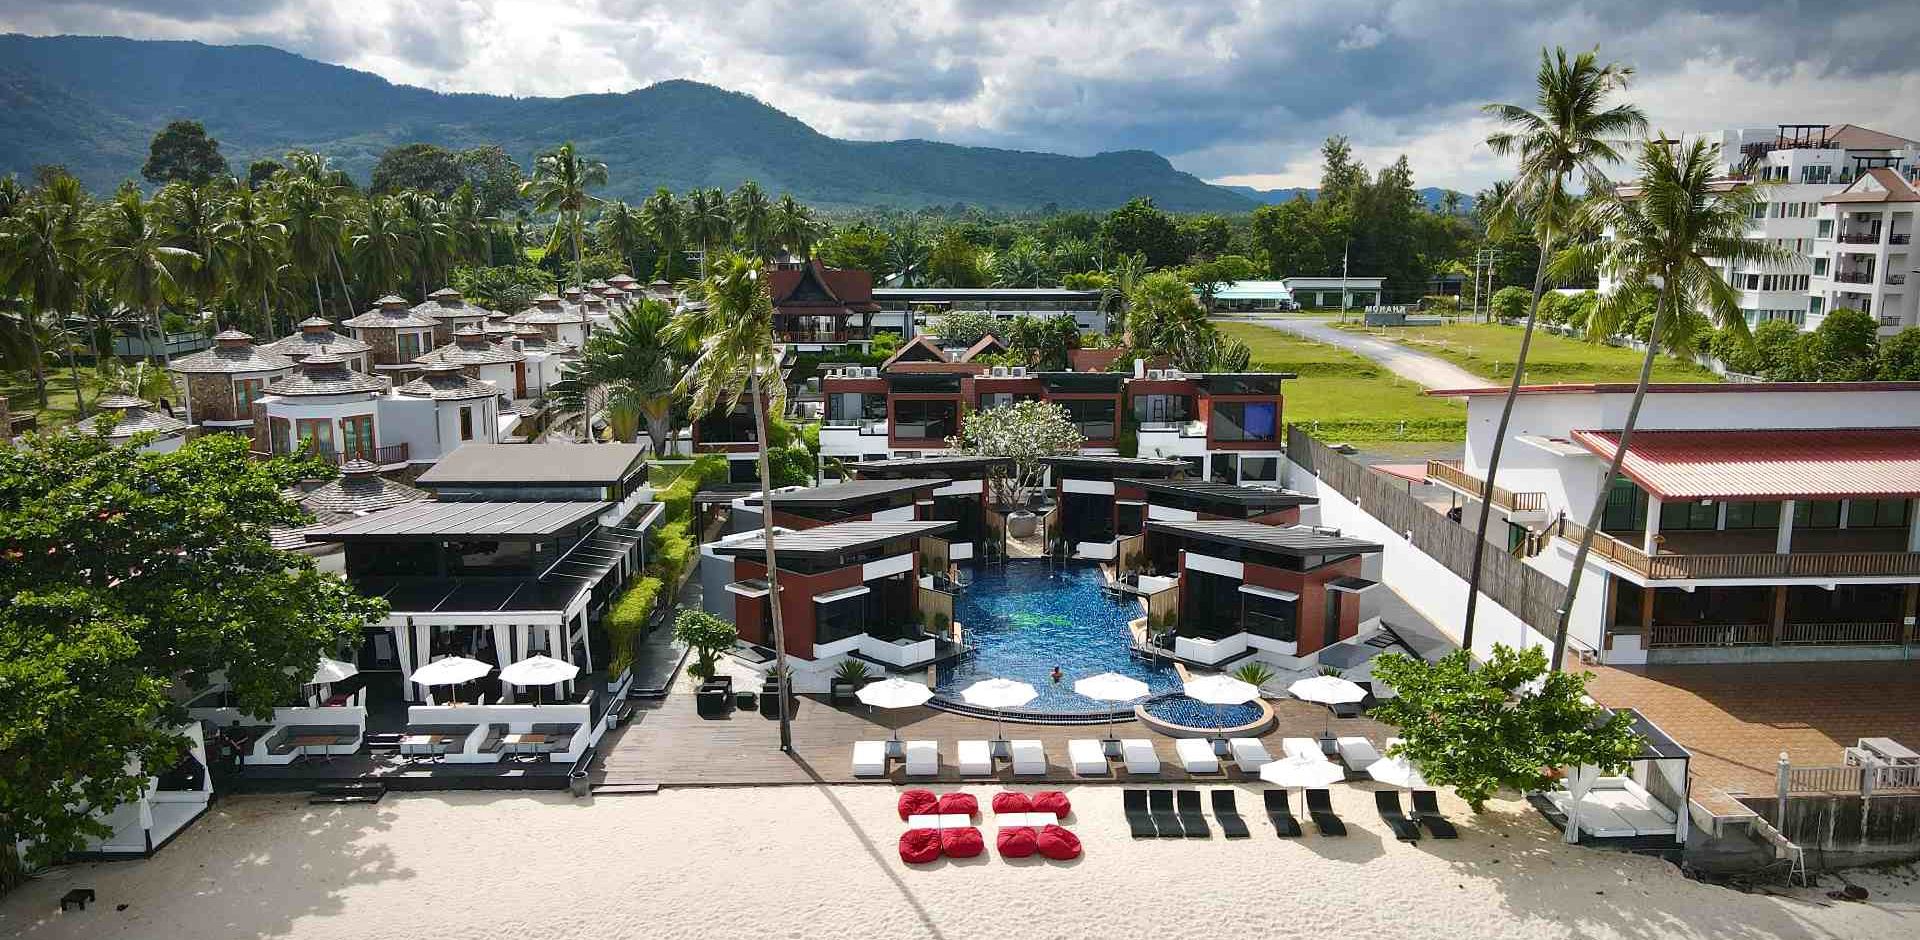 Thailand, Khanom, Aava Resort & Spa, Resort Overview